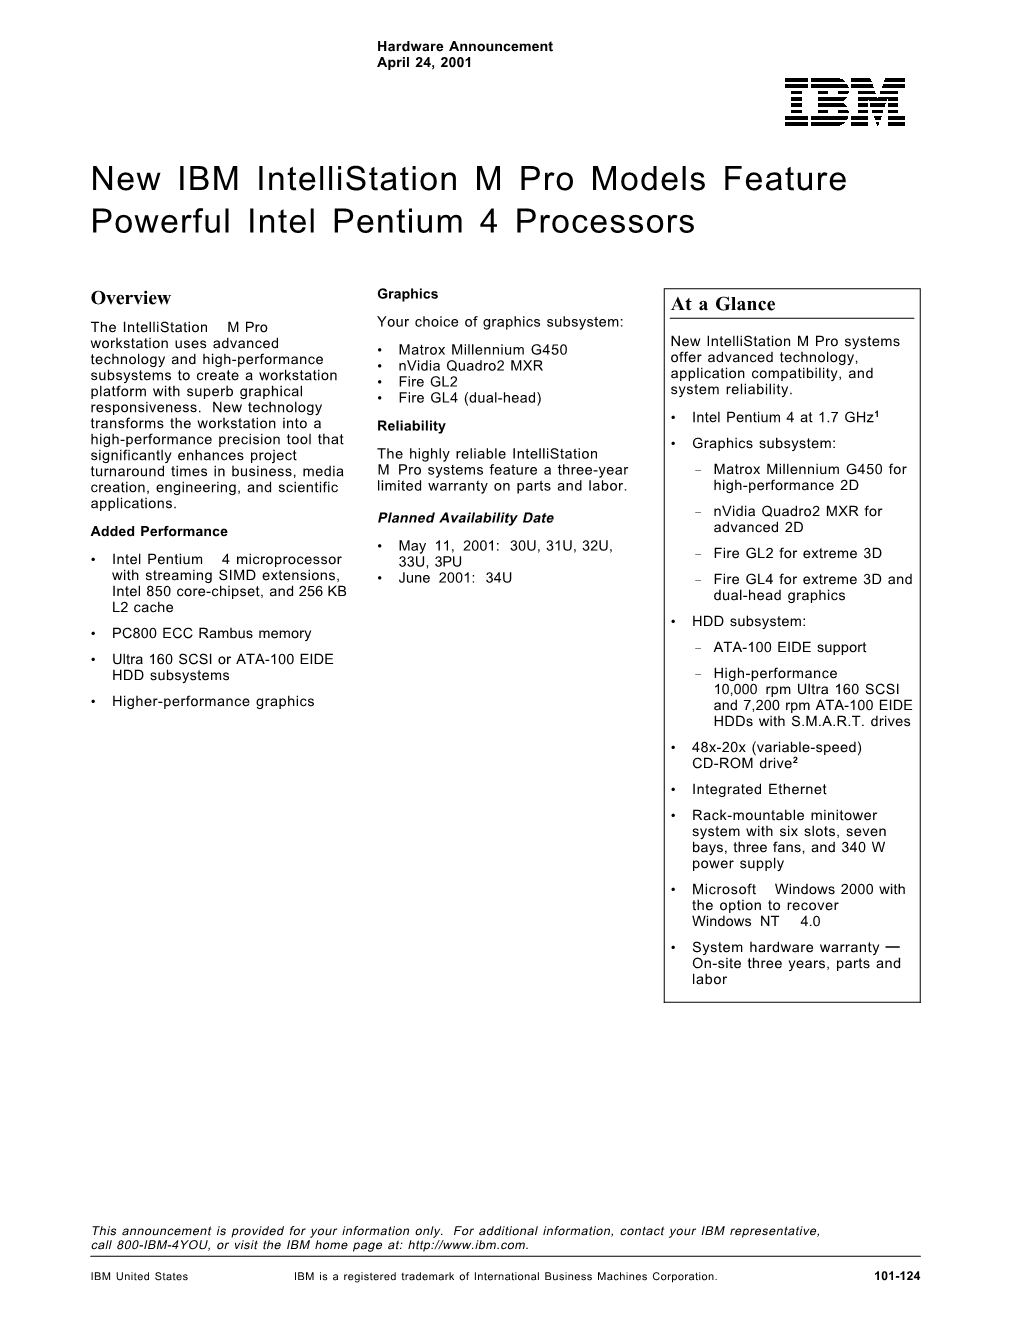 New IBM Intellistation M Pro Models Feature Powerful Intel Pentium 4 Processors